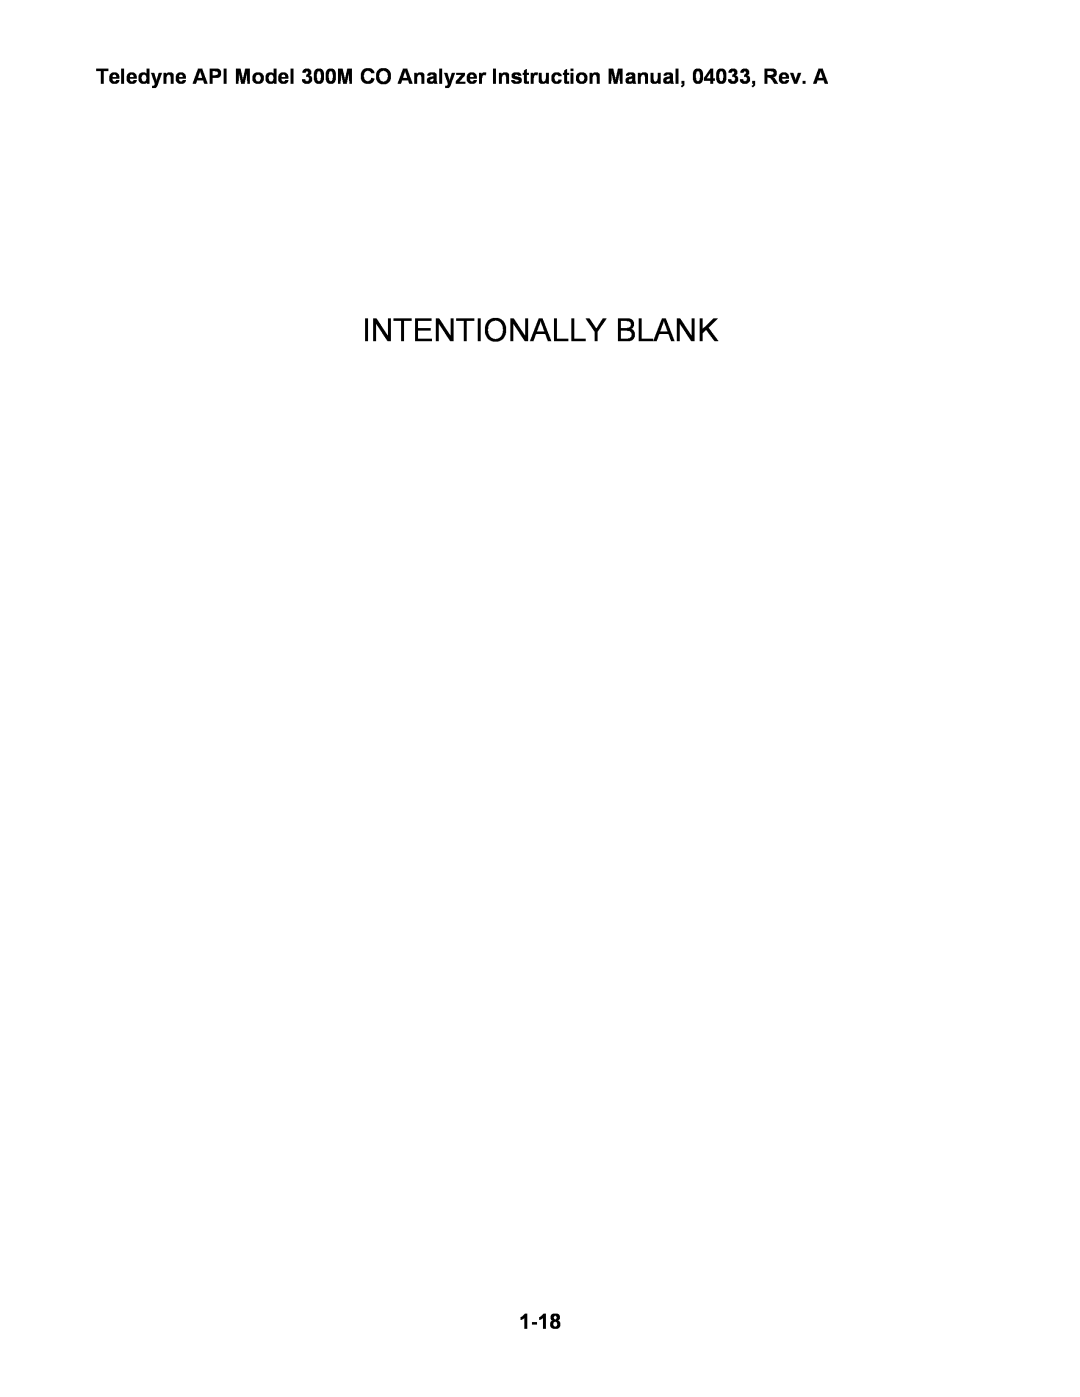 Teledyne 300M instruction manual Intentionally Blank, 1-18 